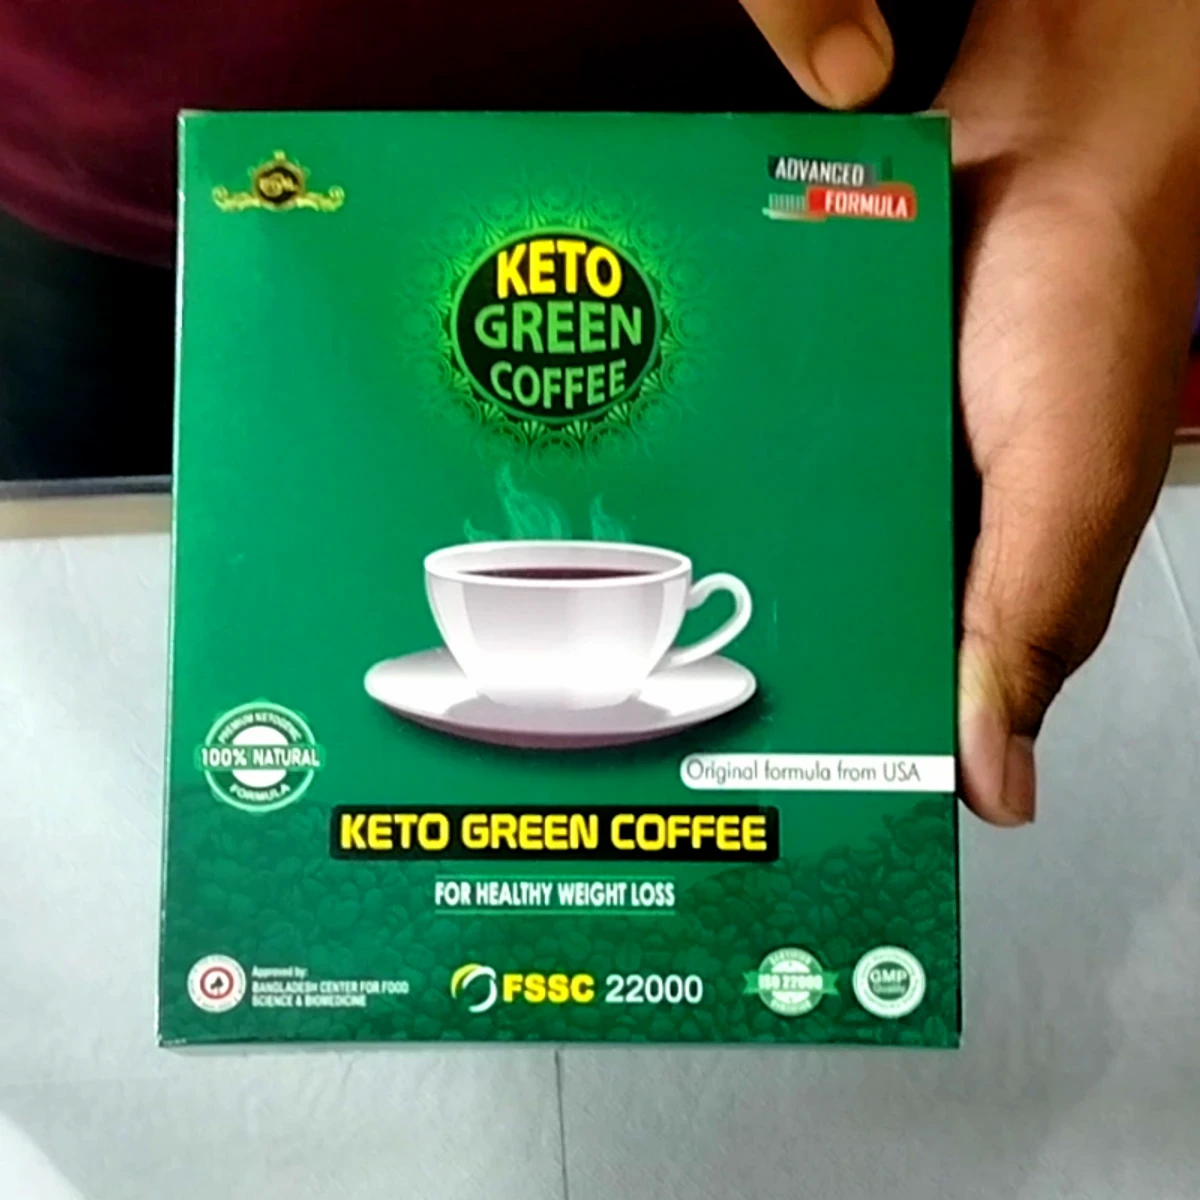 ketto green coffee